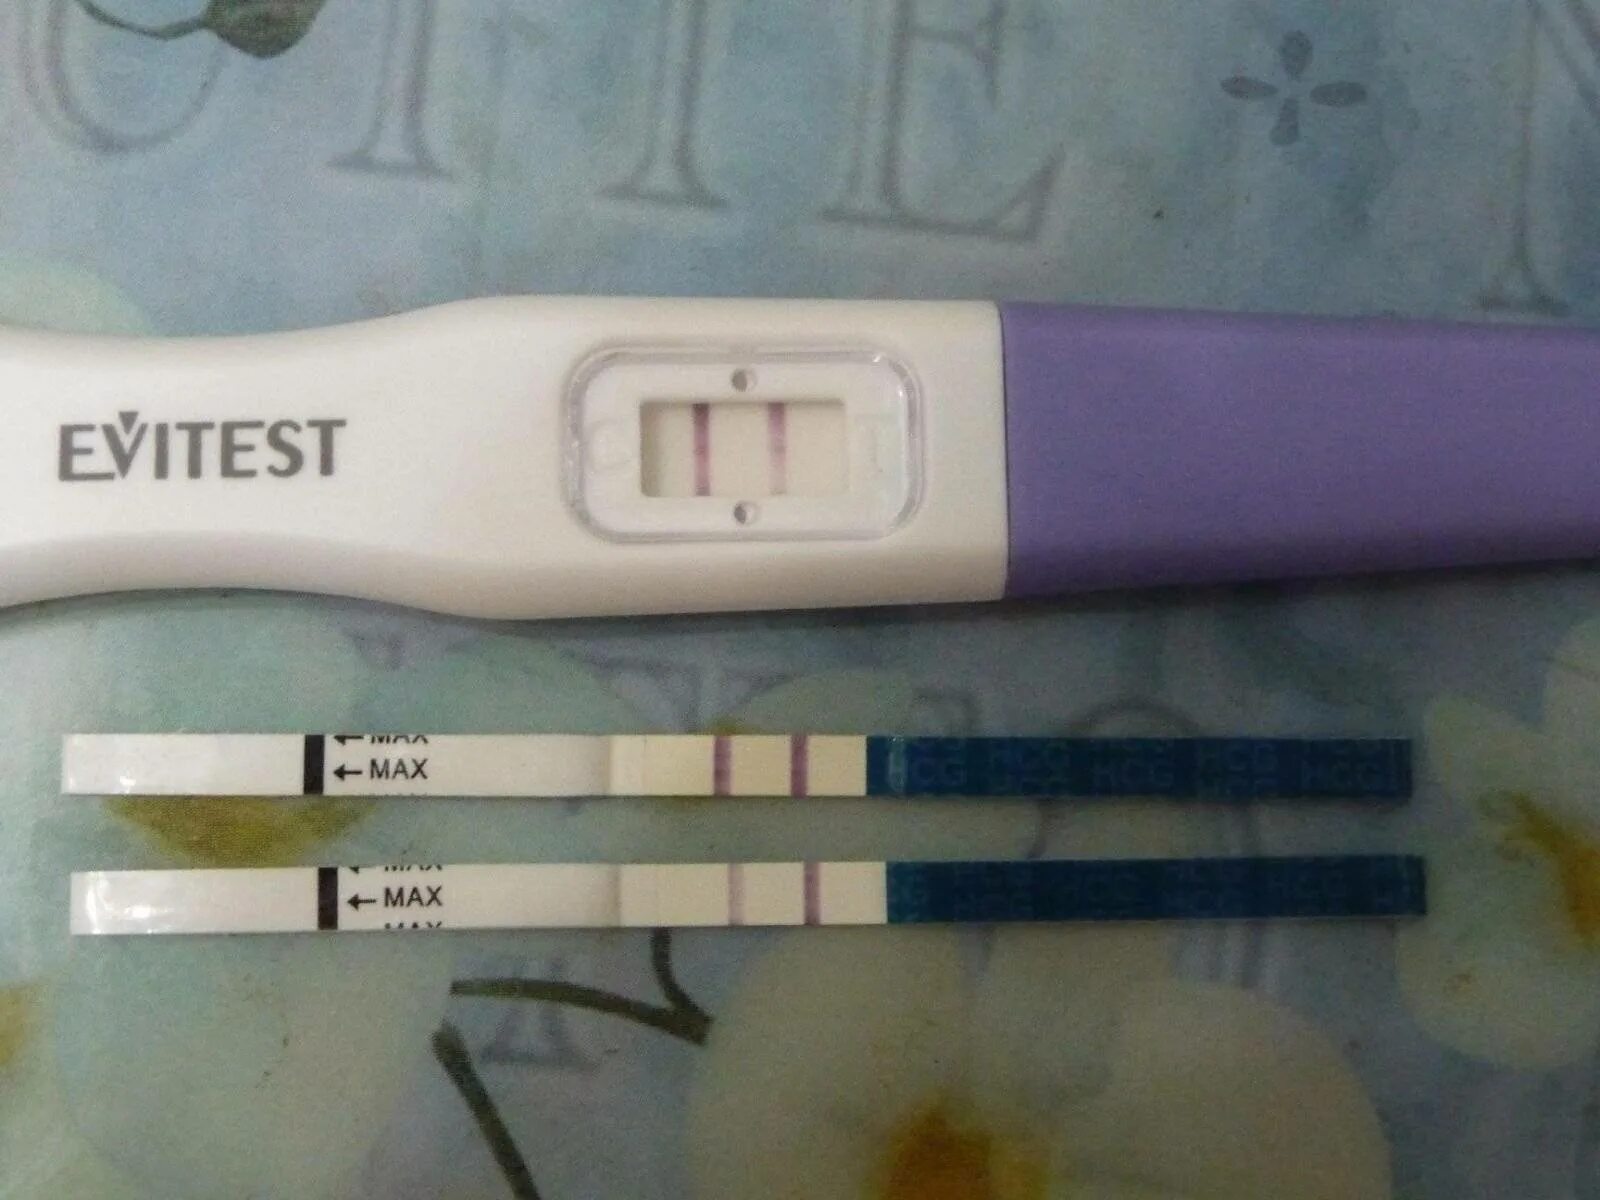 Тест на беременность 4 дня до задержки. Тест на беременность за 2-3 дня до задержки. Струйный тест эвитест за 3 дня до месячных. Тест на беременность 10 день цикла эвитест. Неделя до месячных беременность есть